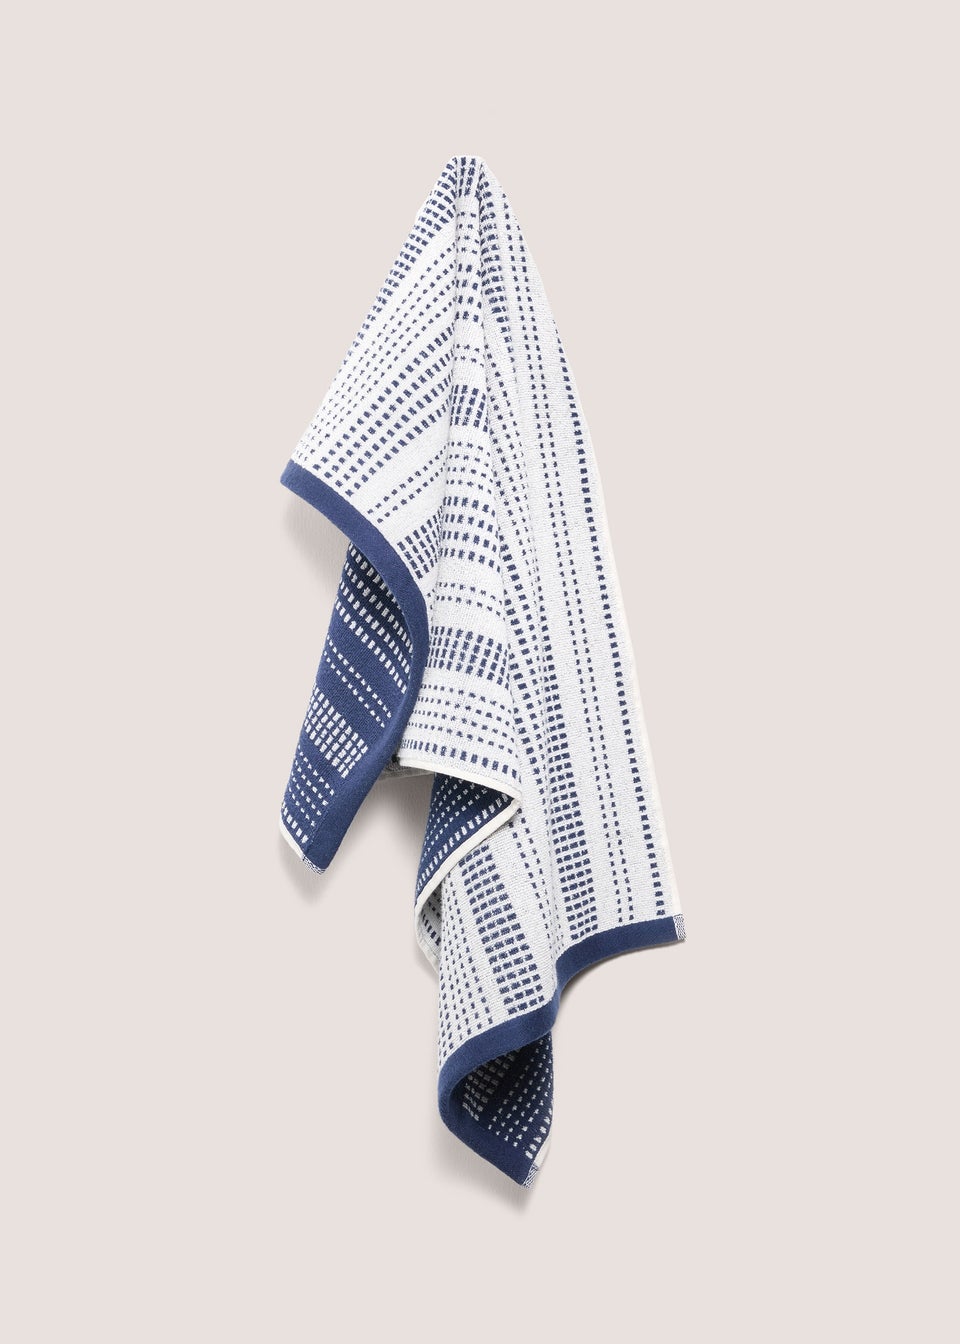 100% Cotton Blue Indigo Stripe Towel